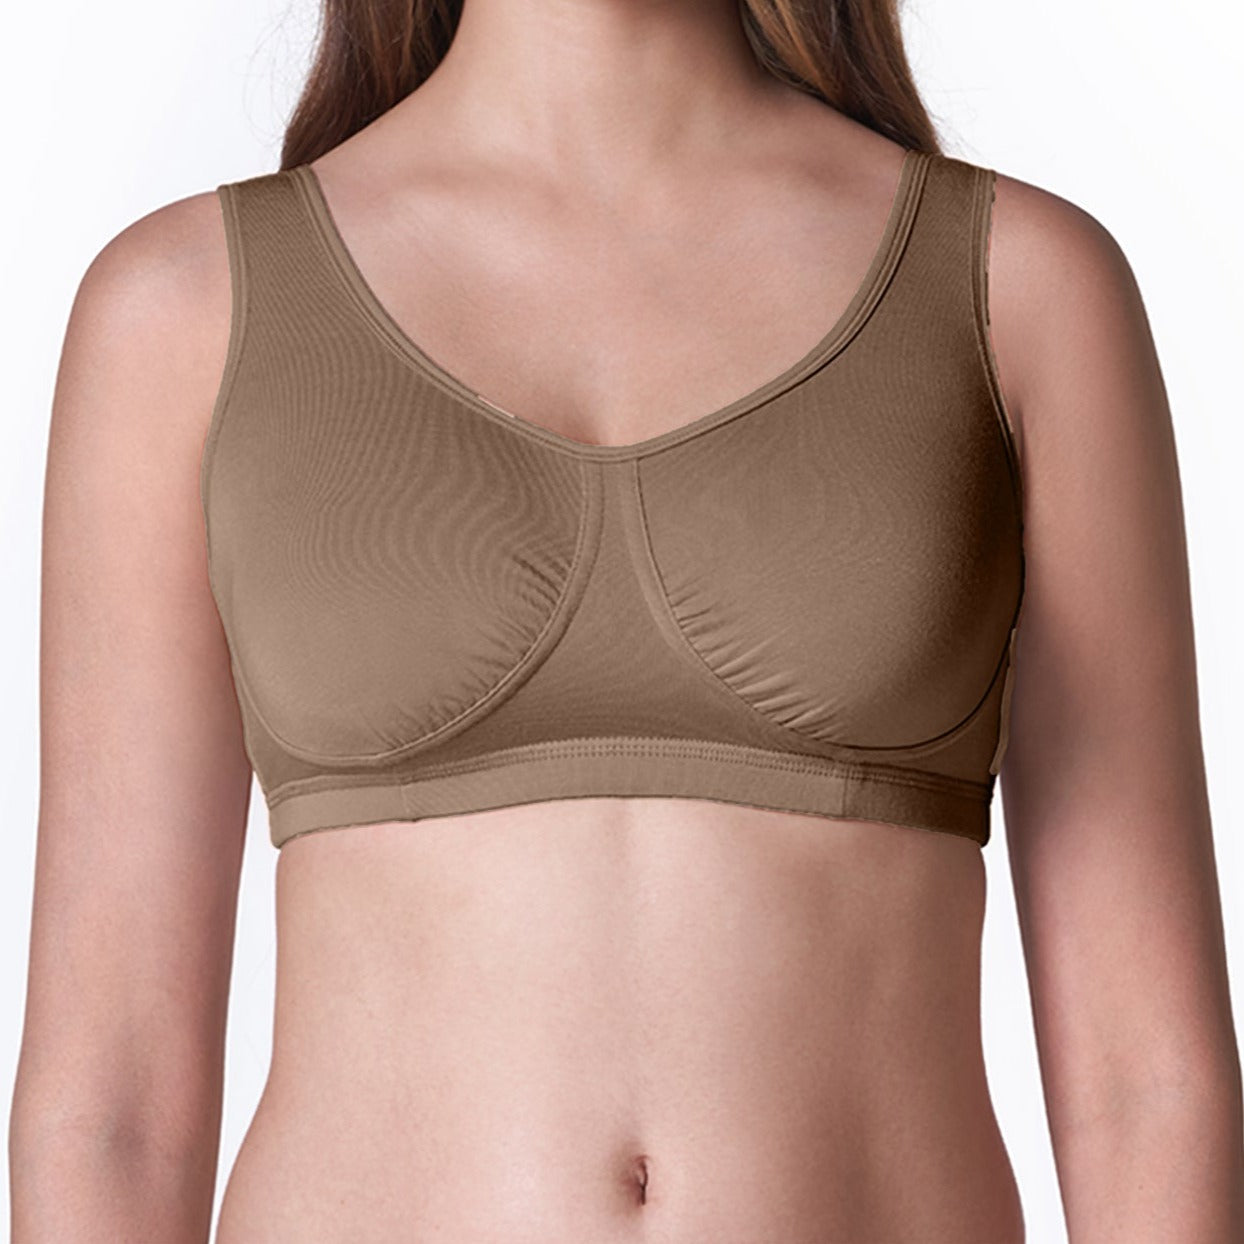 blossom-night bra-camel brown1-Slip-On-utility based bra